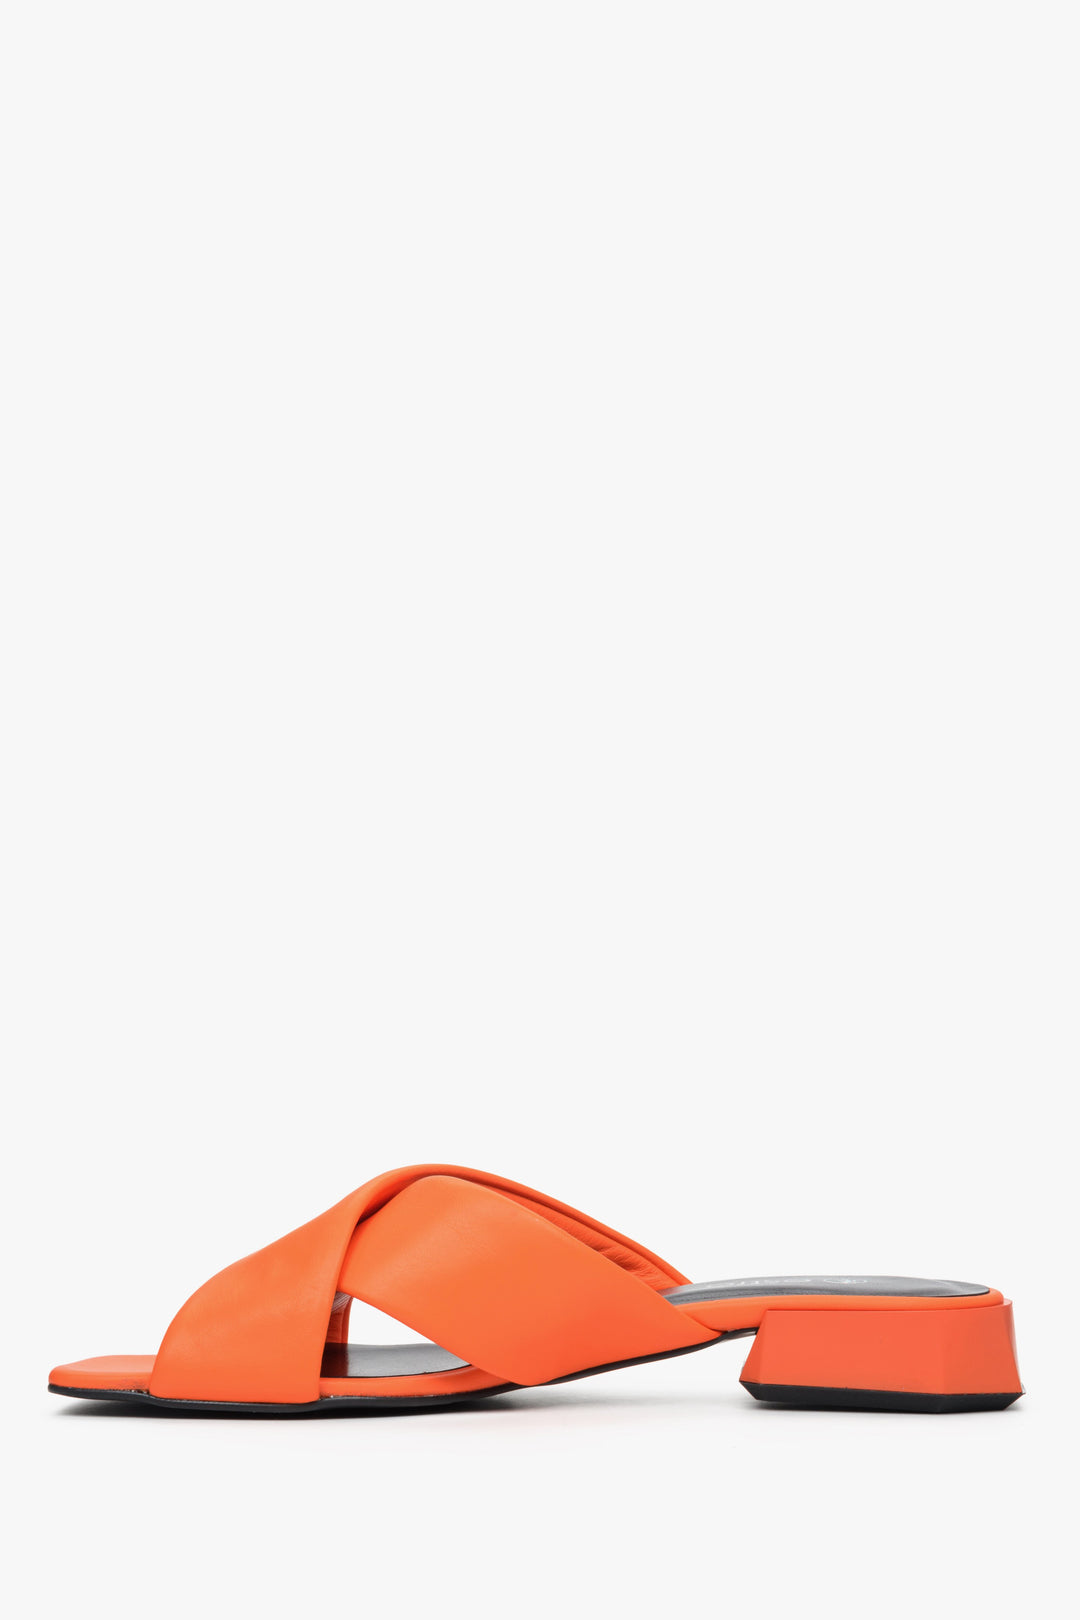 Women's cross-strap mules in orange colour of Estro brand made of natural, Italian leather.